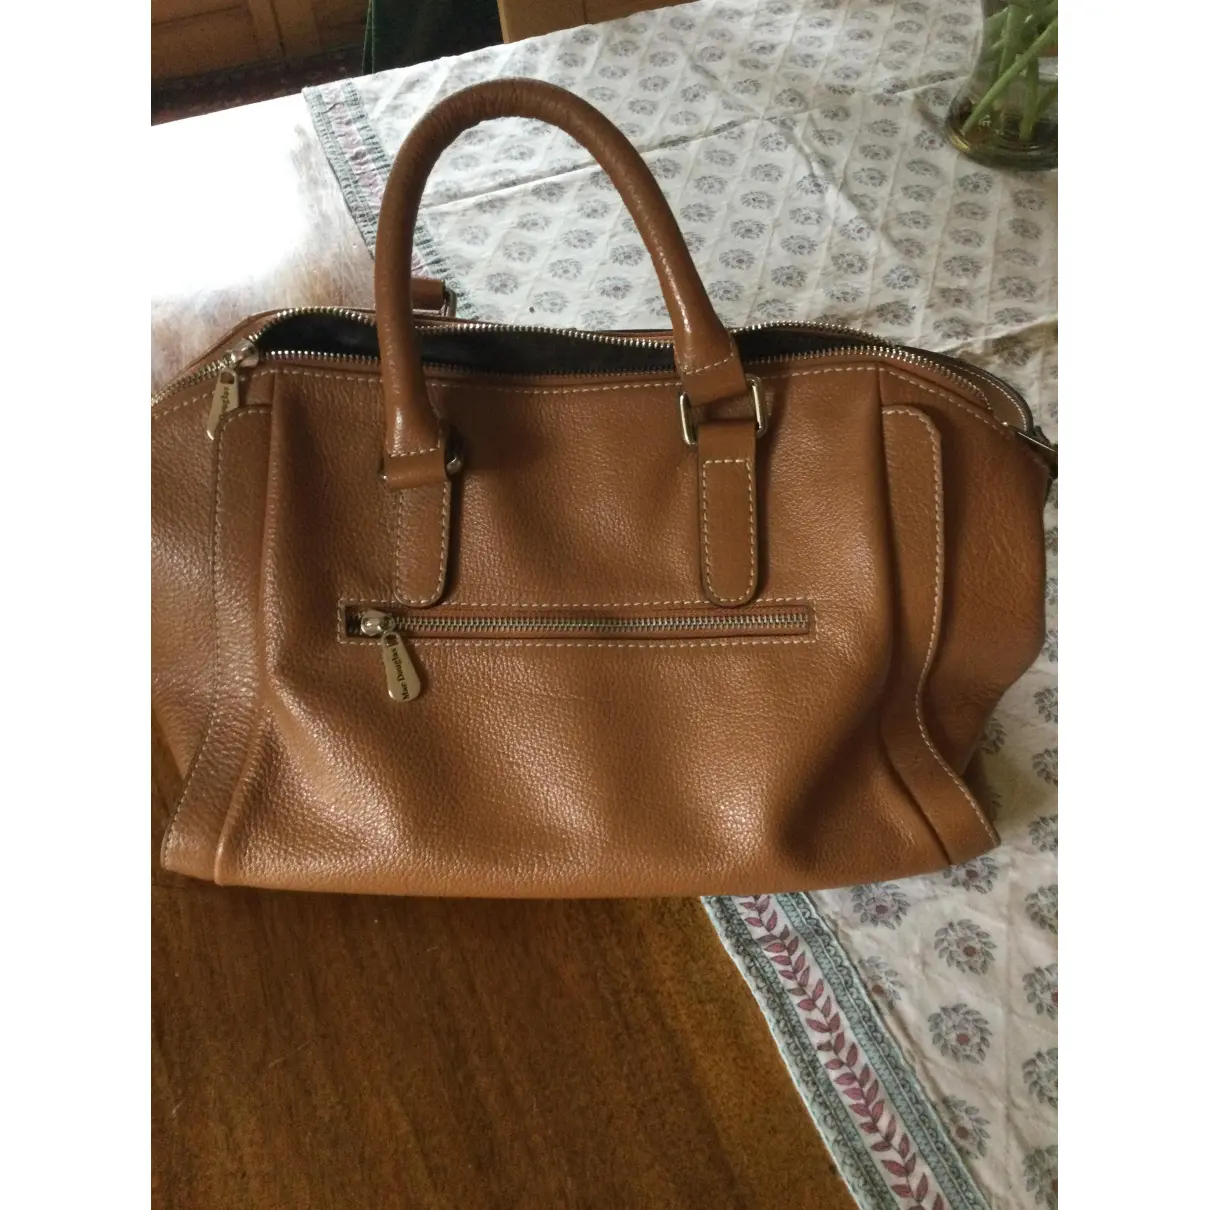 Buy Mac Douglas Leather handbag online